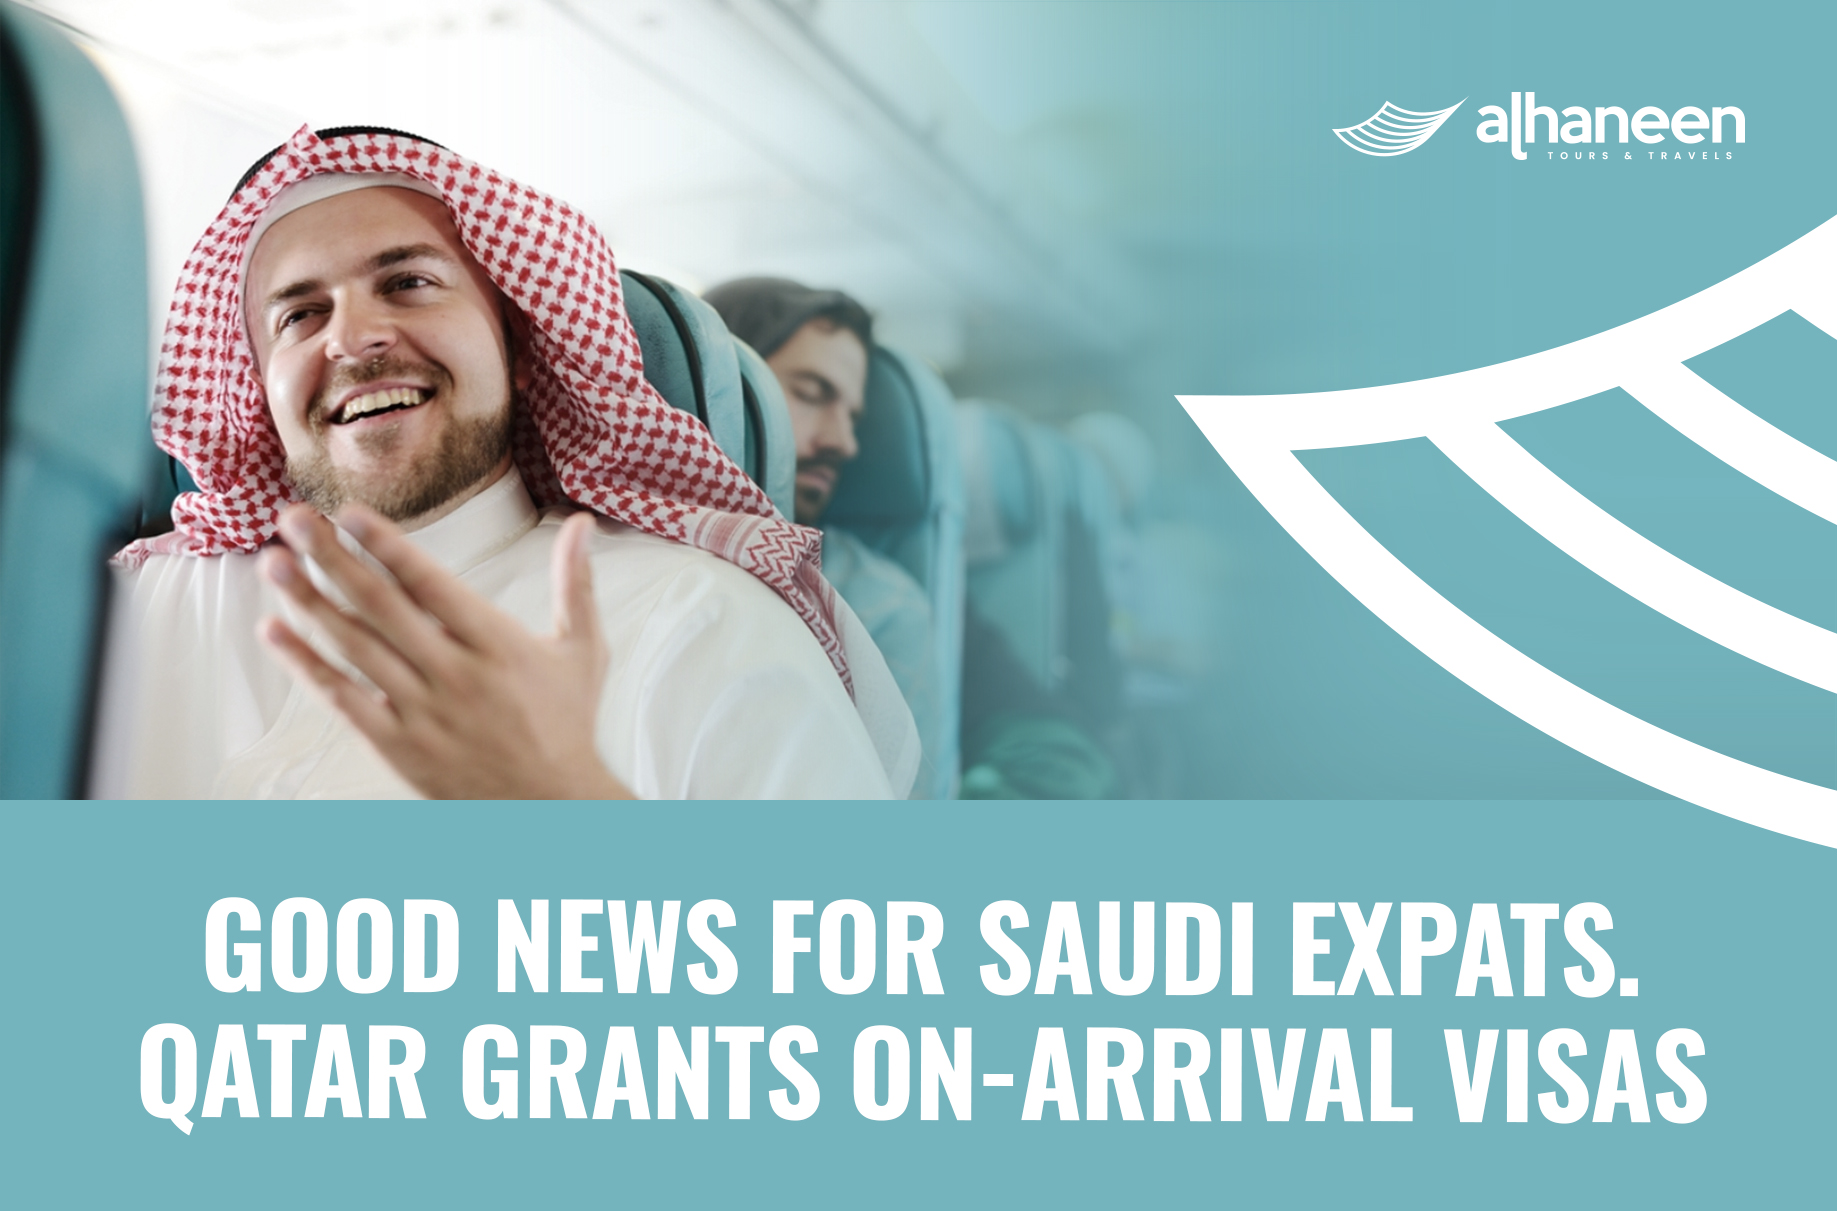 Good news for Saudi expats. Qatar grants on-arrival visas